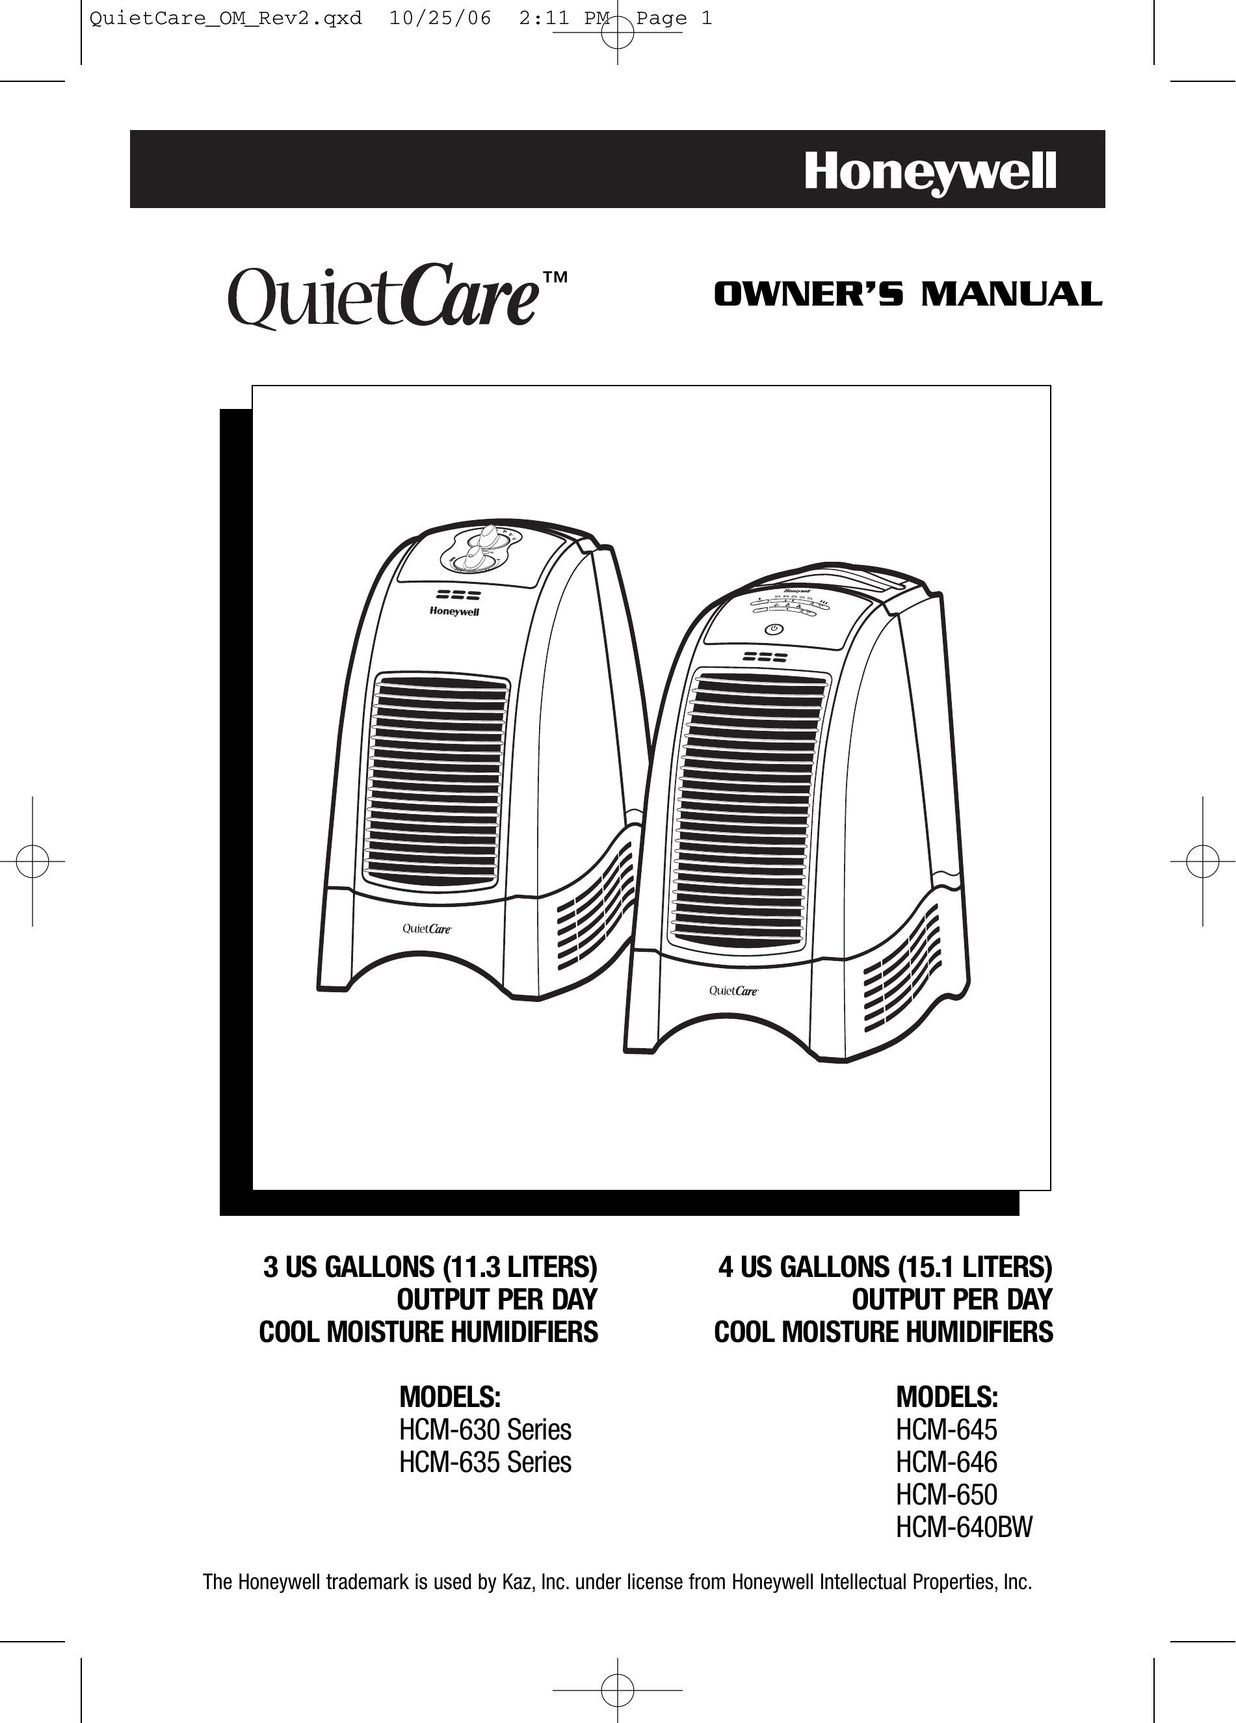 Honeywell HCM-635 Series Humidifier User Manual